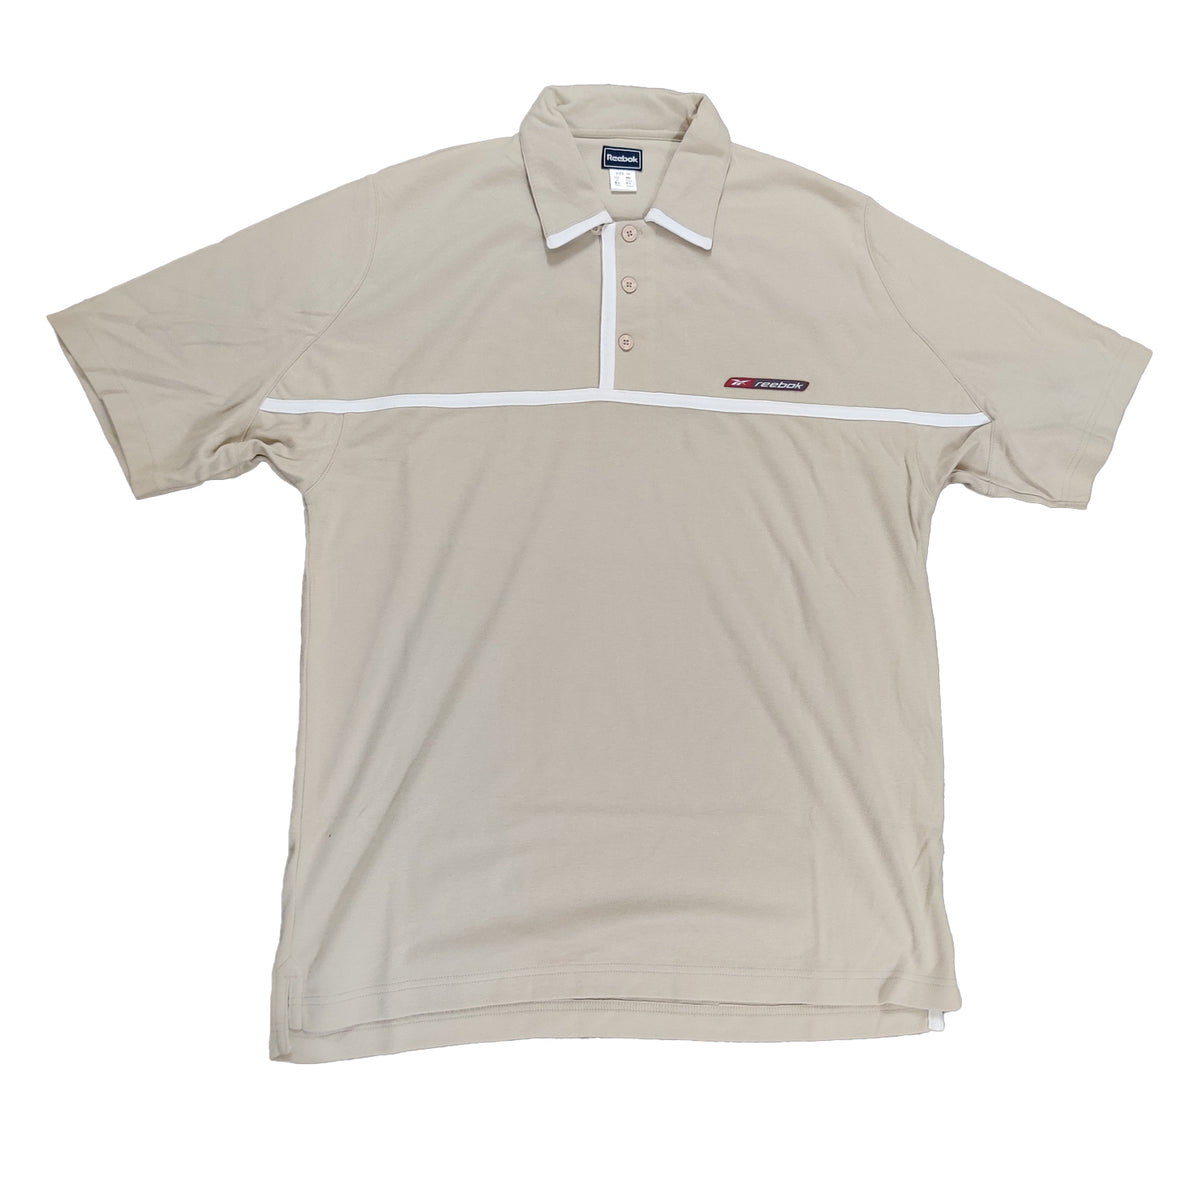 Reebok Mens Clearance Beige Fitness Polo T-Shirt - Medium